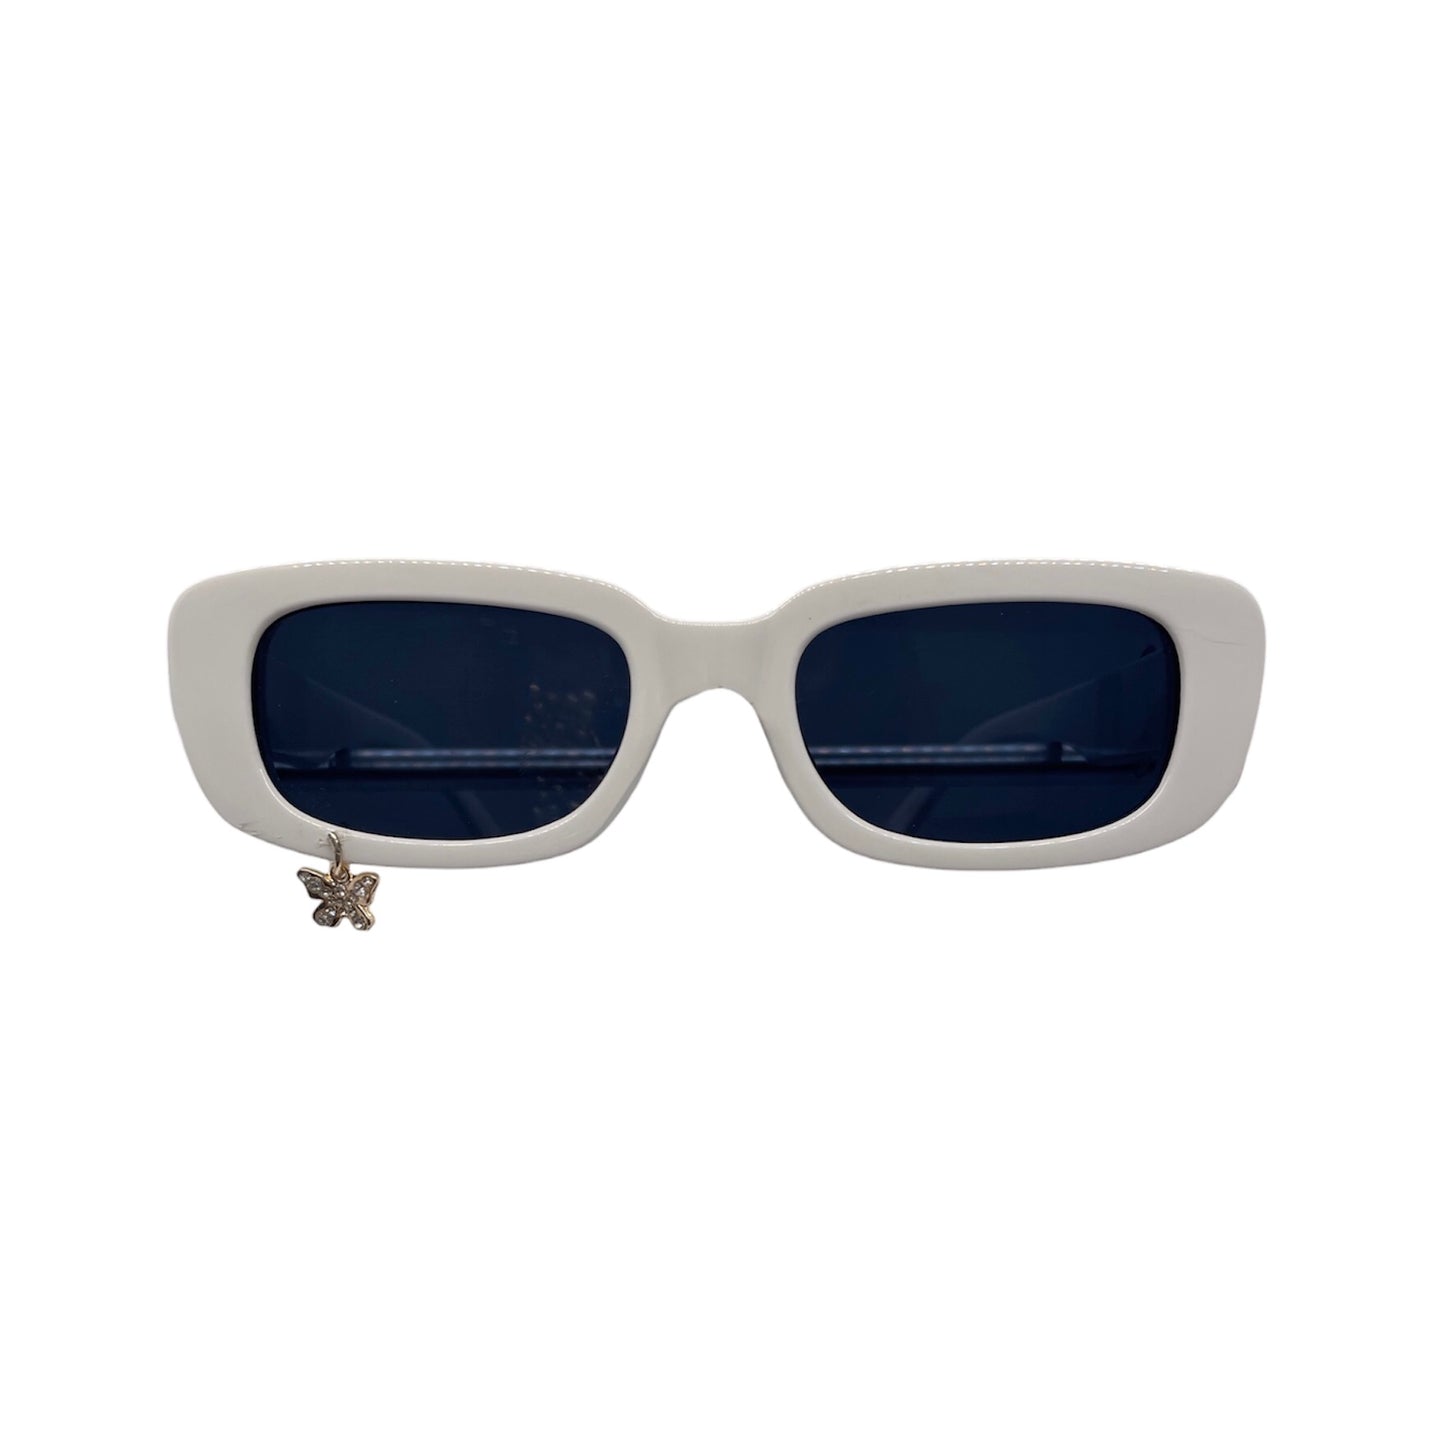 White Butterfly Sunglasses (Non-Polarized)